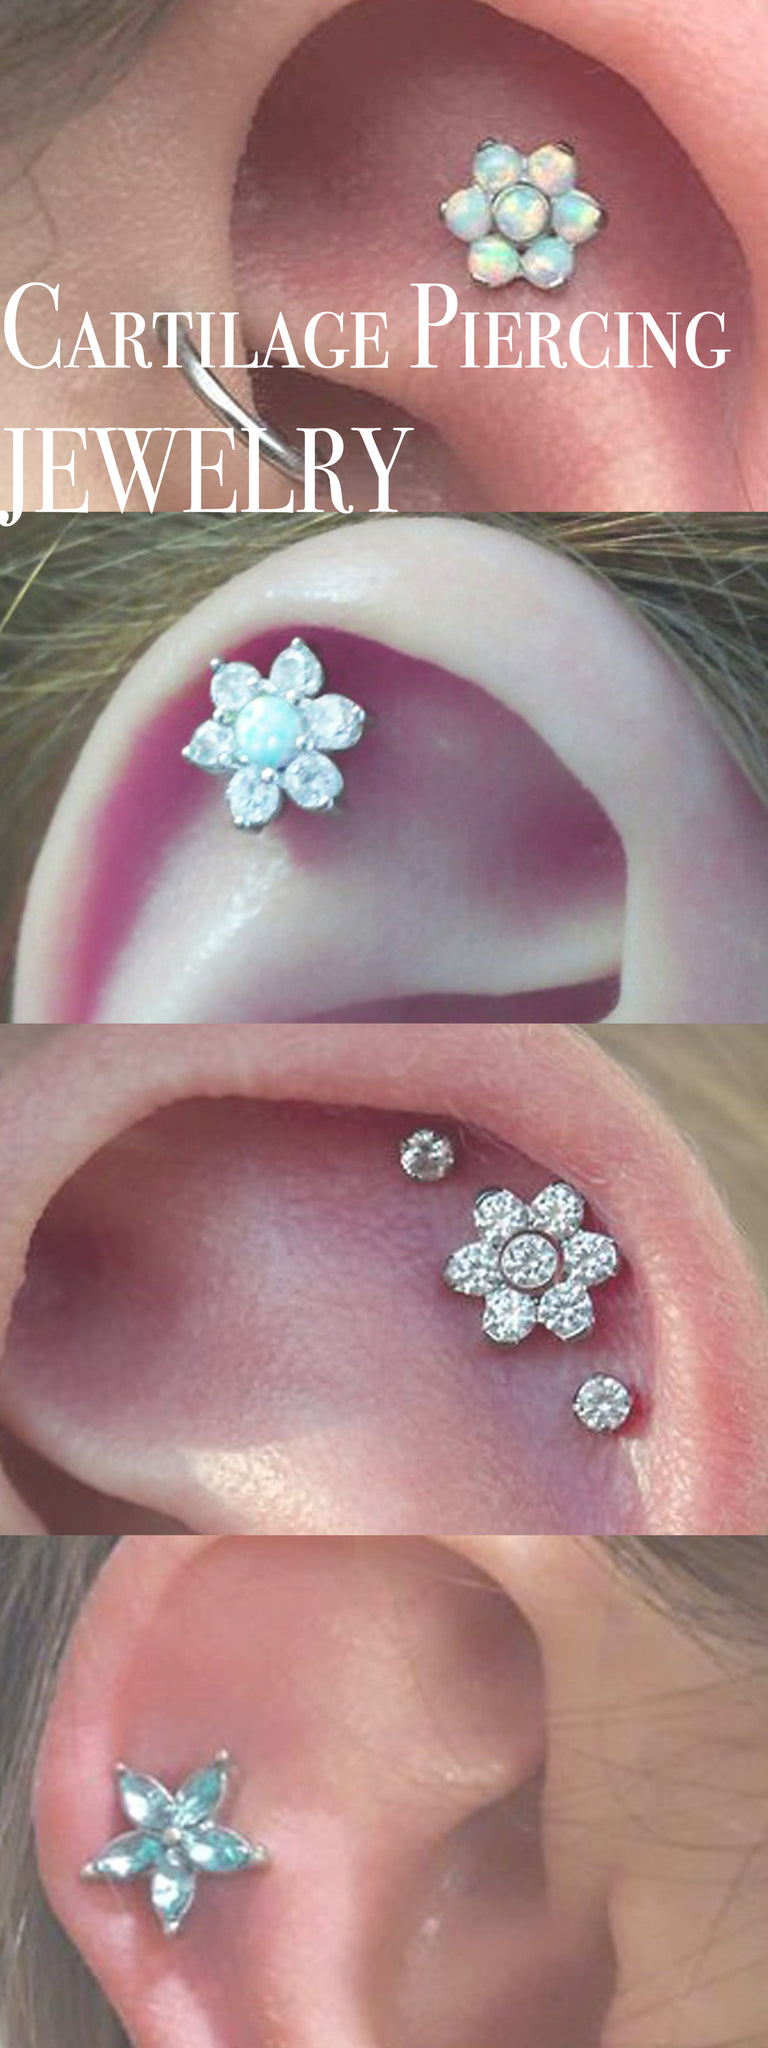 Multiple Ear Piercing Ideas for Cartilage Jewelry - Crystal Opal Flower Constellation Stud - MyBodiArt.com 